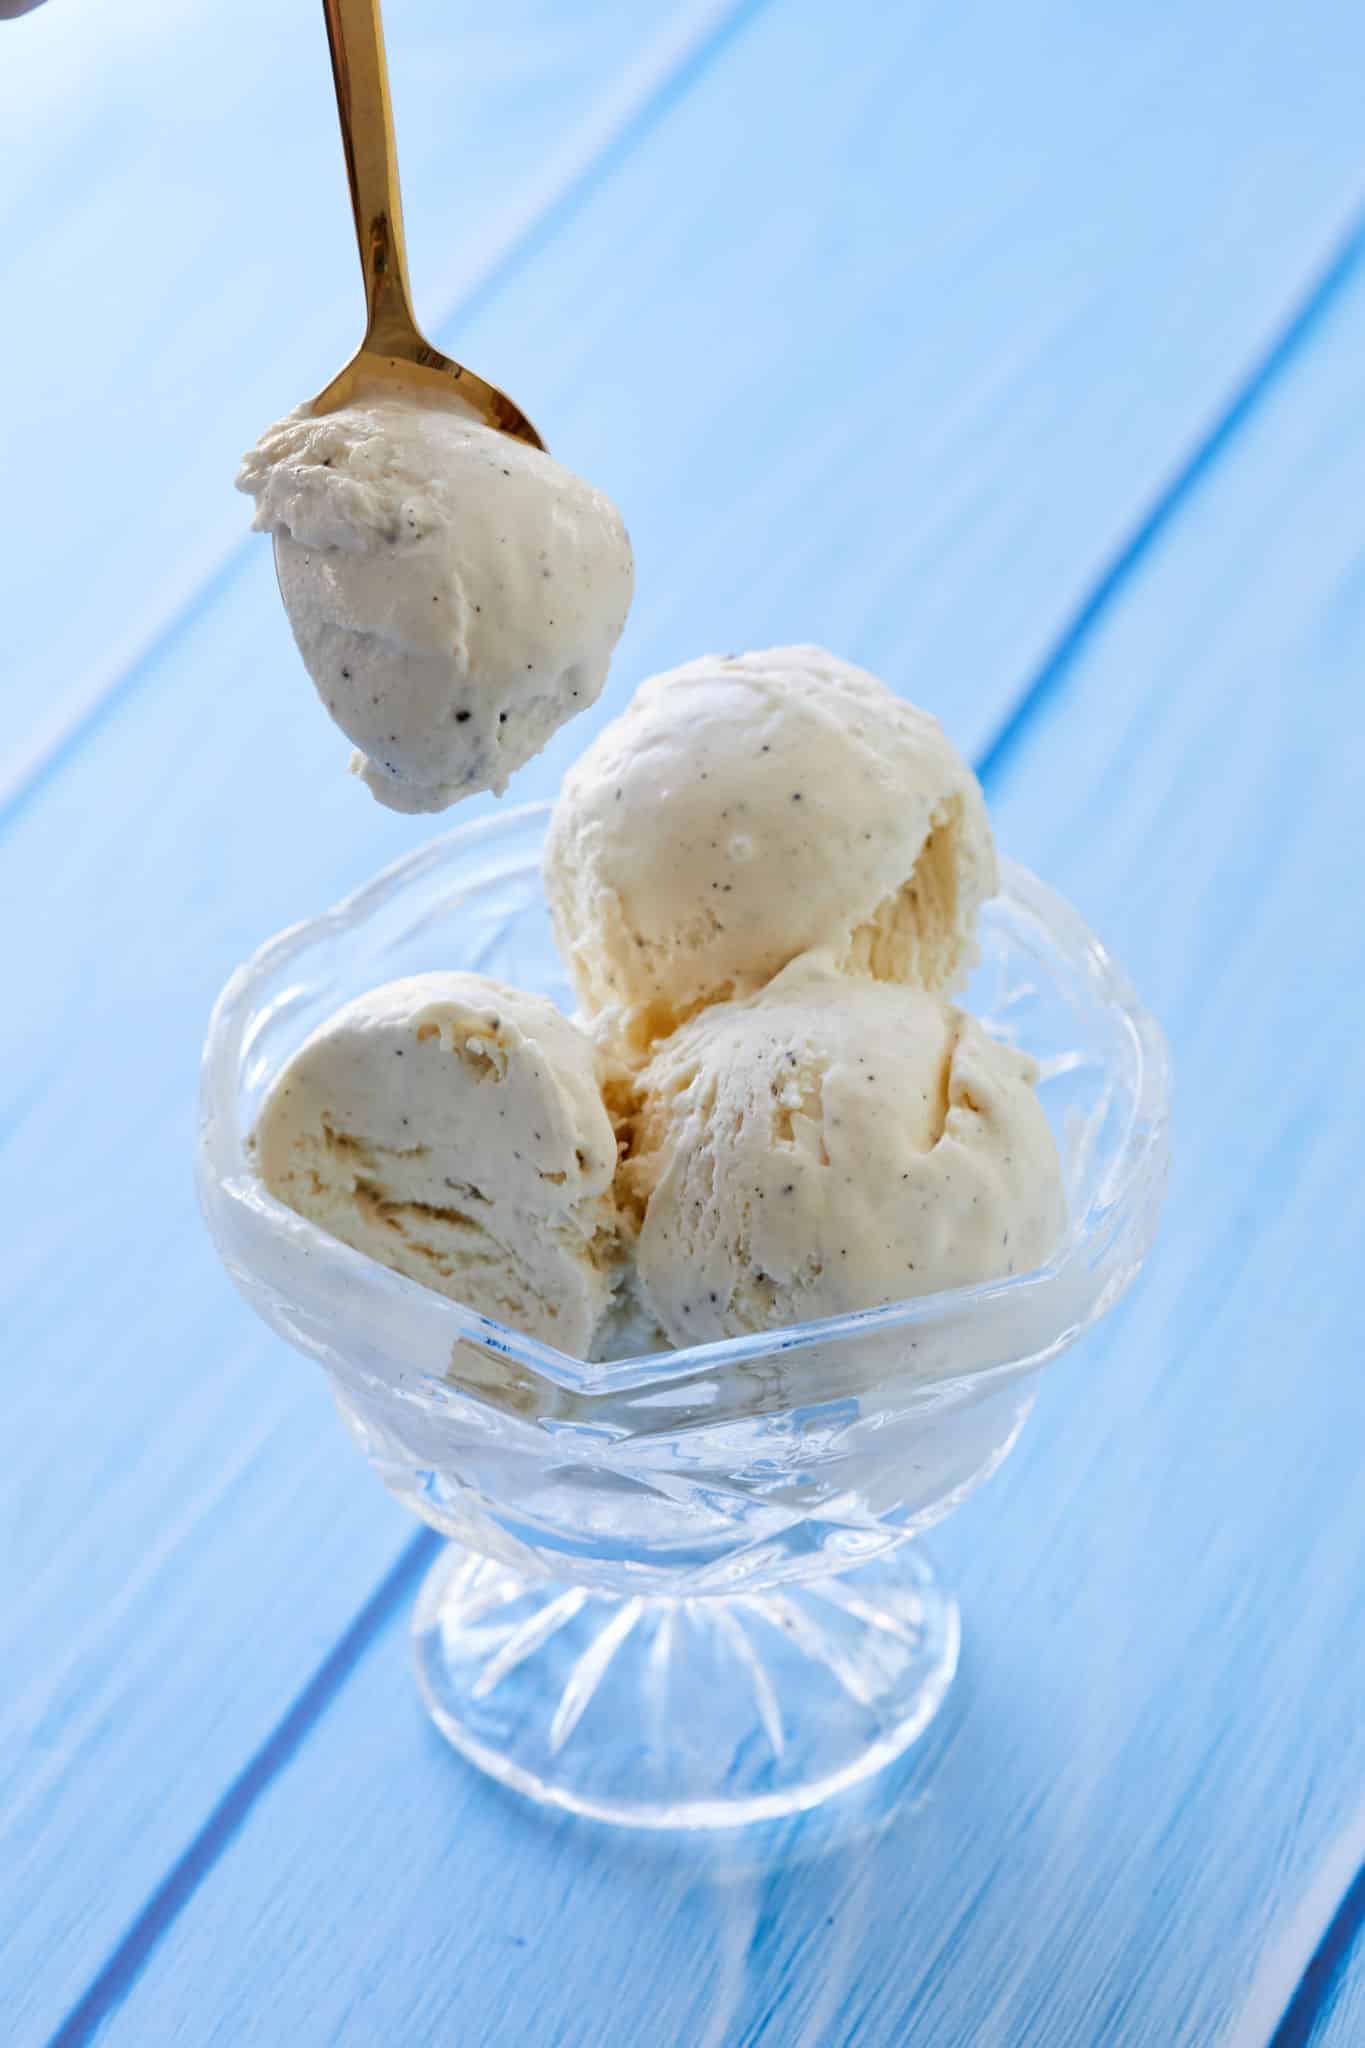 https://www.biggerbolderbaking.com/wp-content/uploads/2018/05/Vanilla-2-Ingredient-Ice-cream3-scaled.jpg